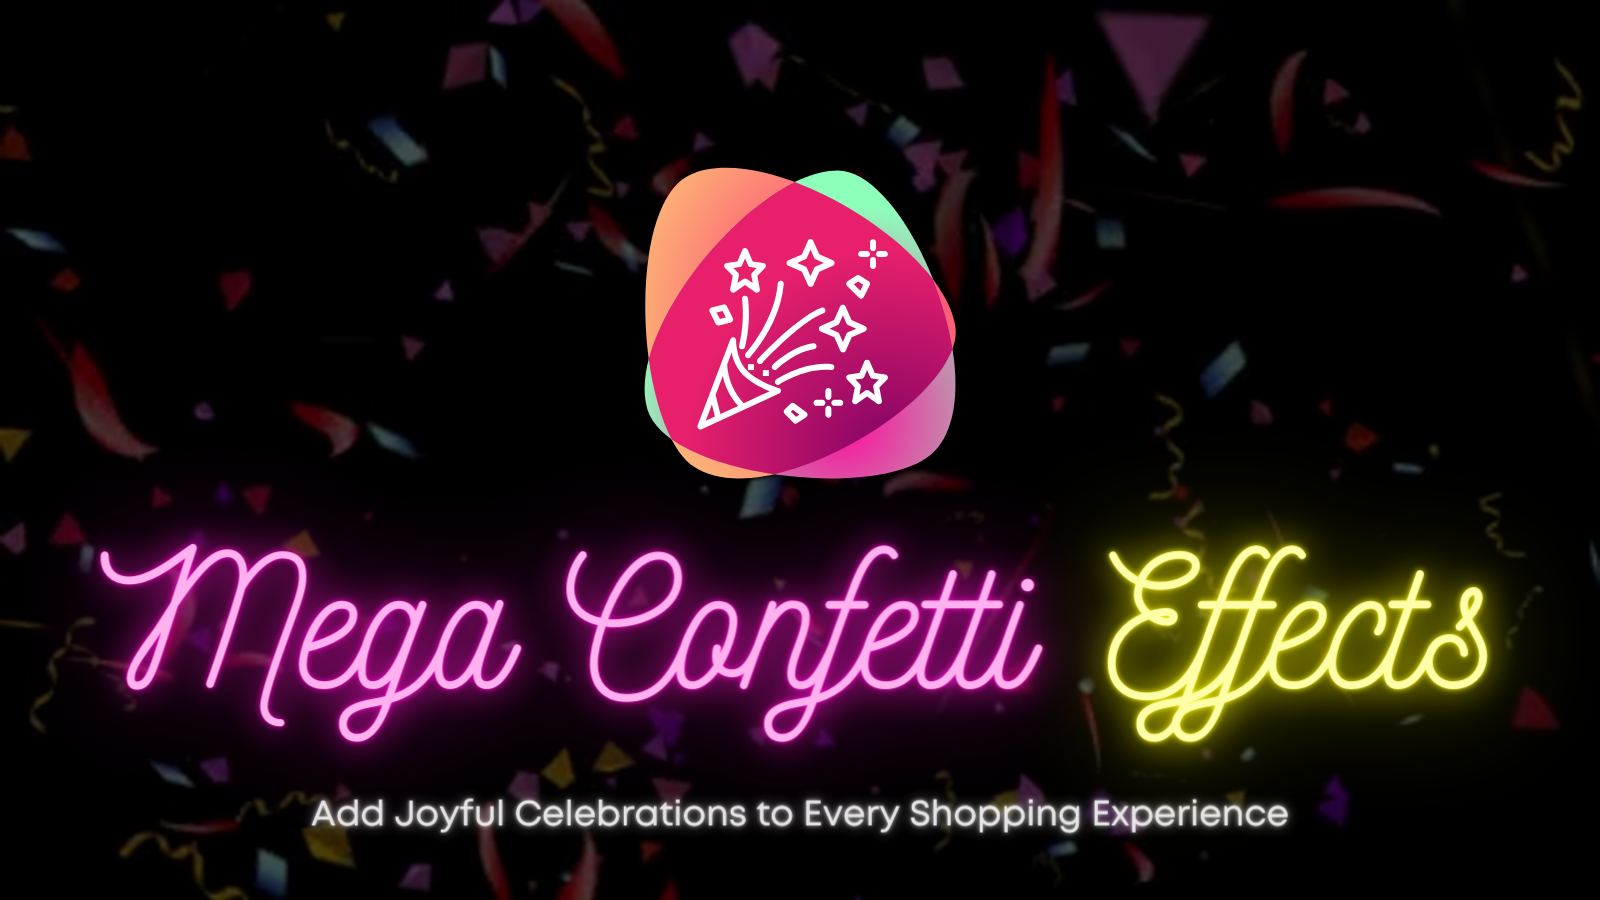 Mega Confetti Effects Betover je winkel met schitterende confetti!